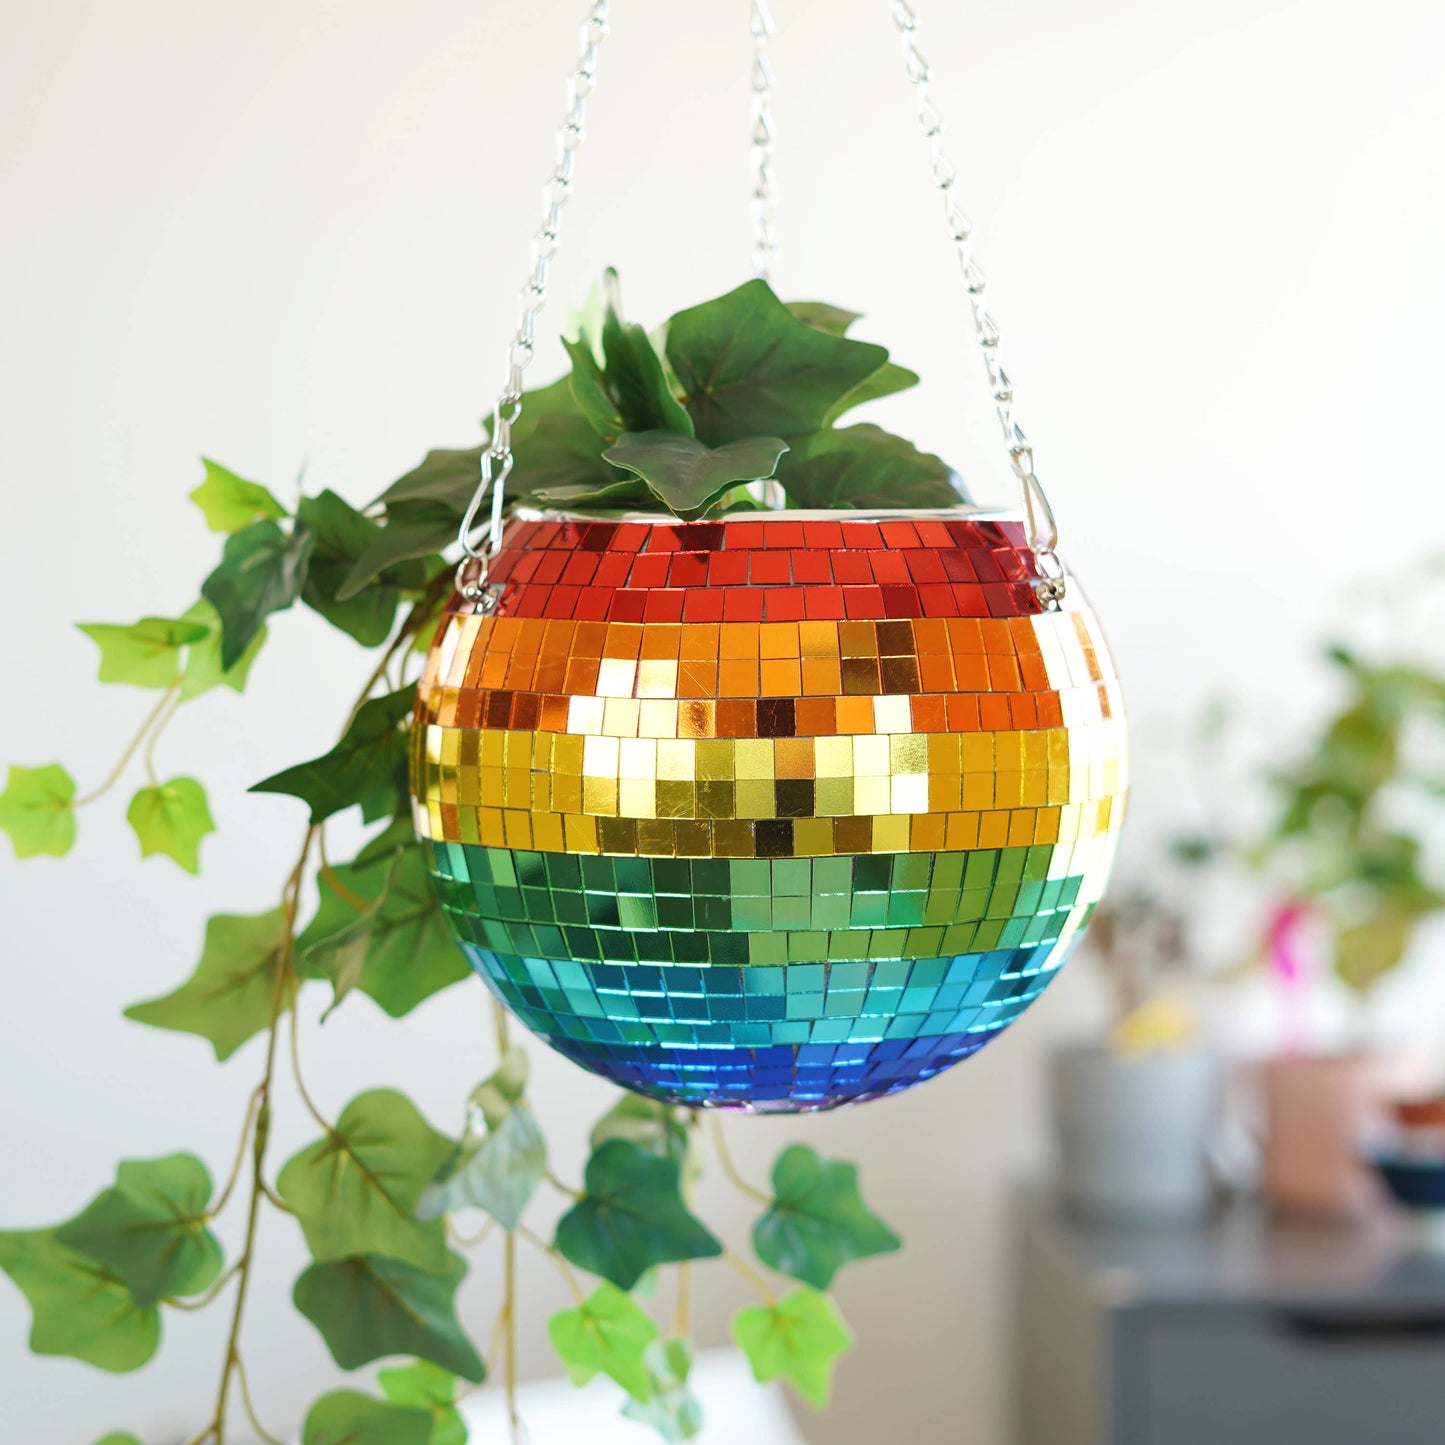 Disco Ball Hanging Planter - Rainbow 8"